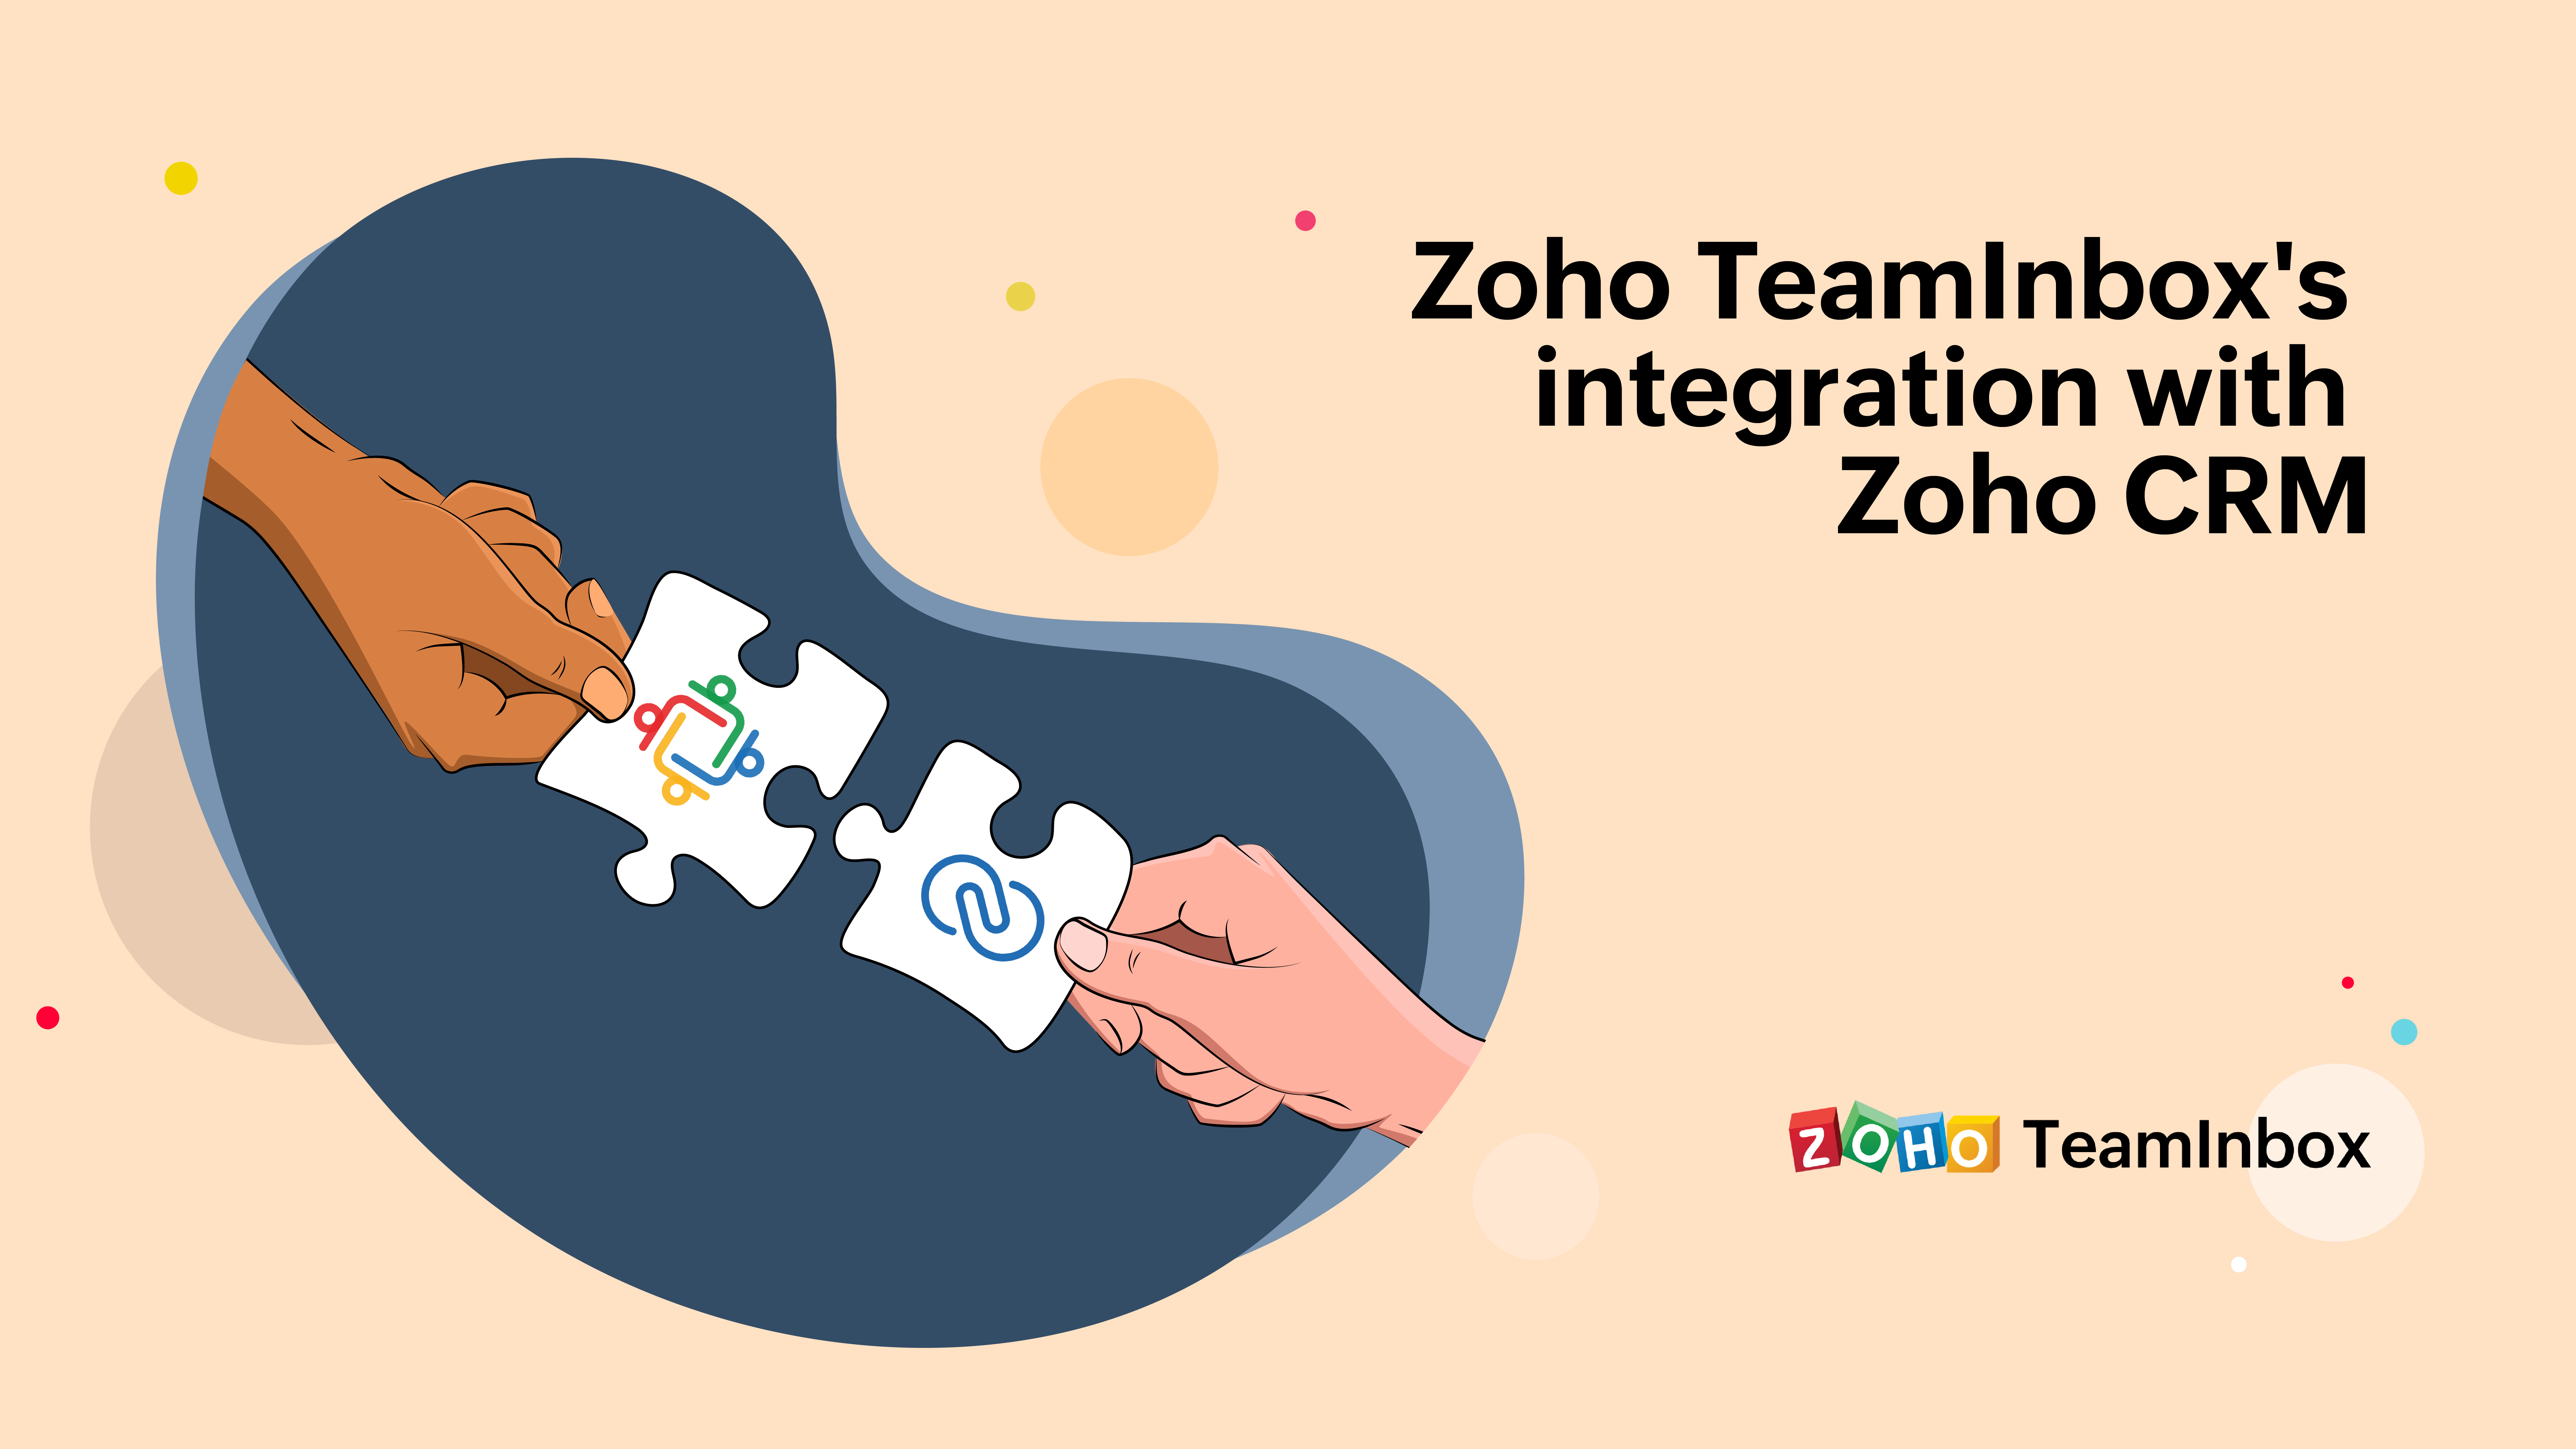 Zoho TeamInbox’s integration with Zoho CRM